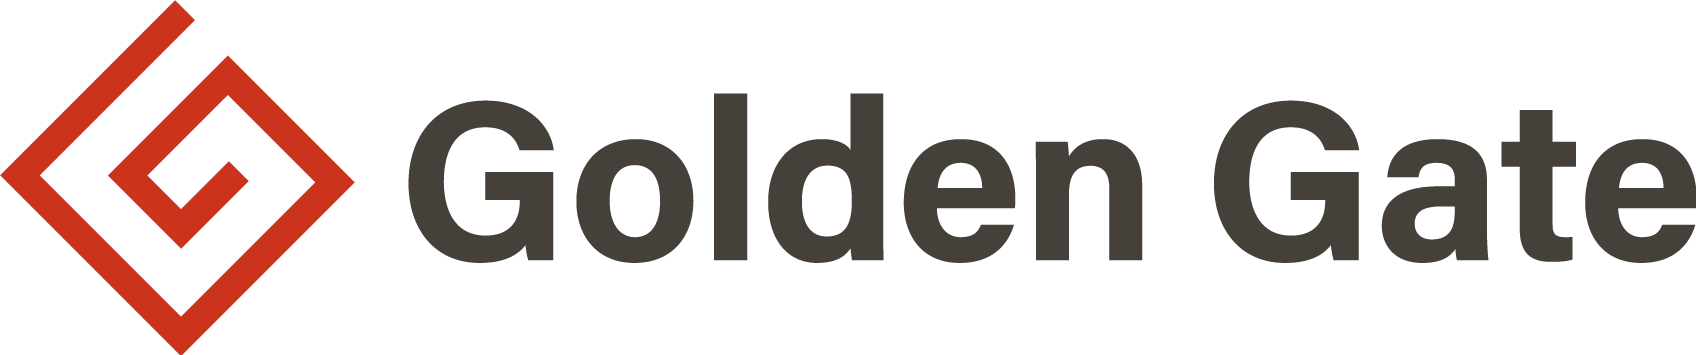 GoldenGate logo RGB basic